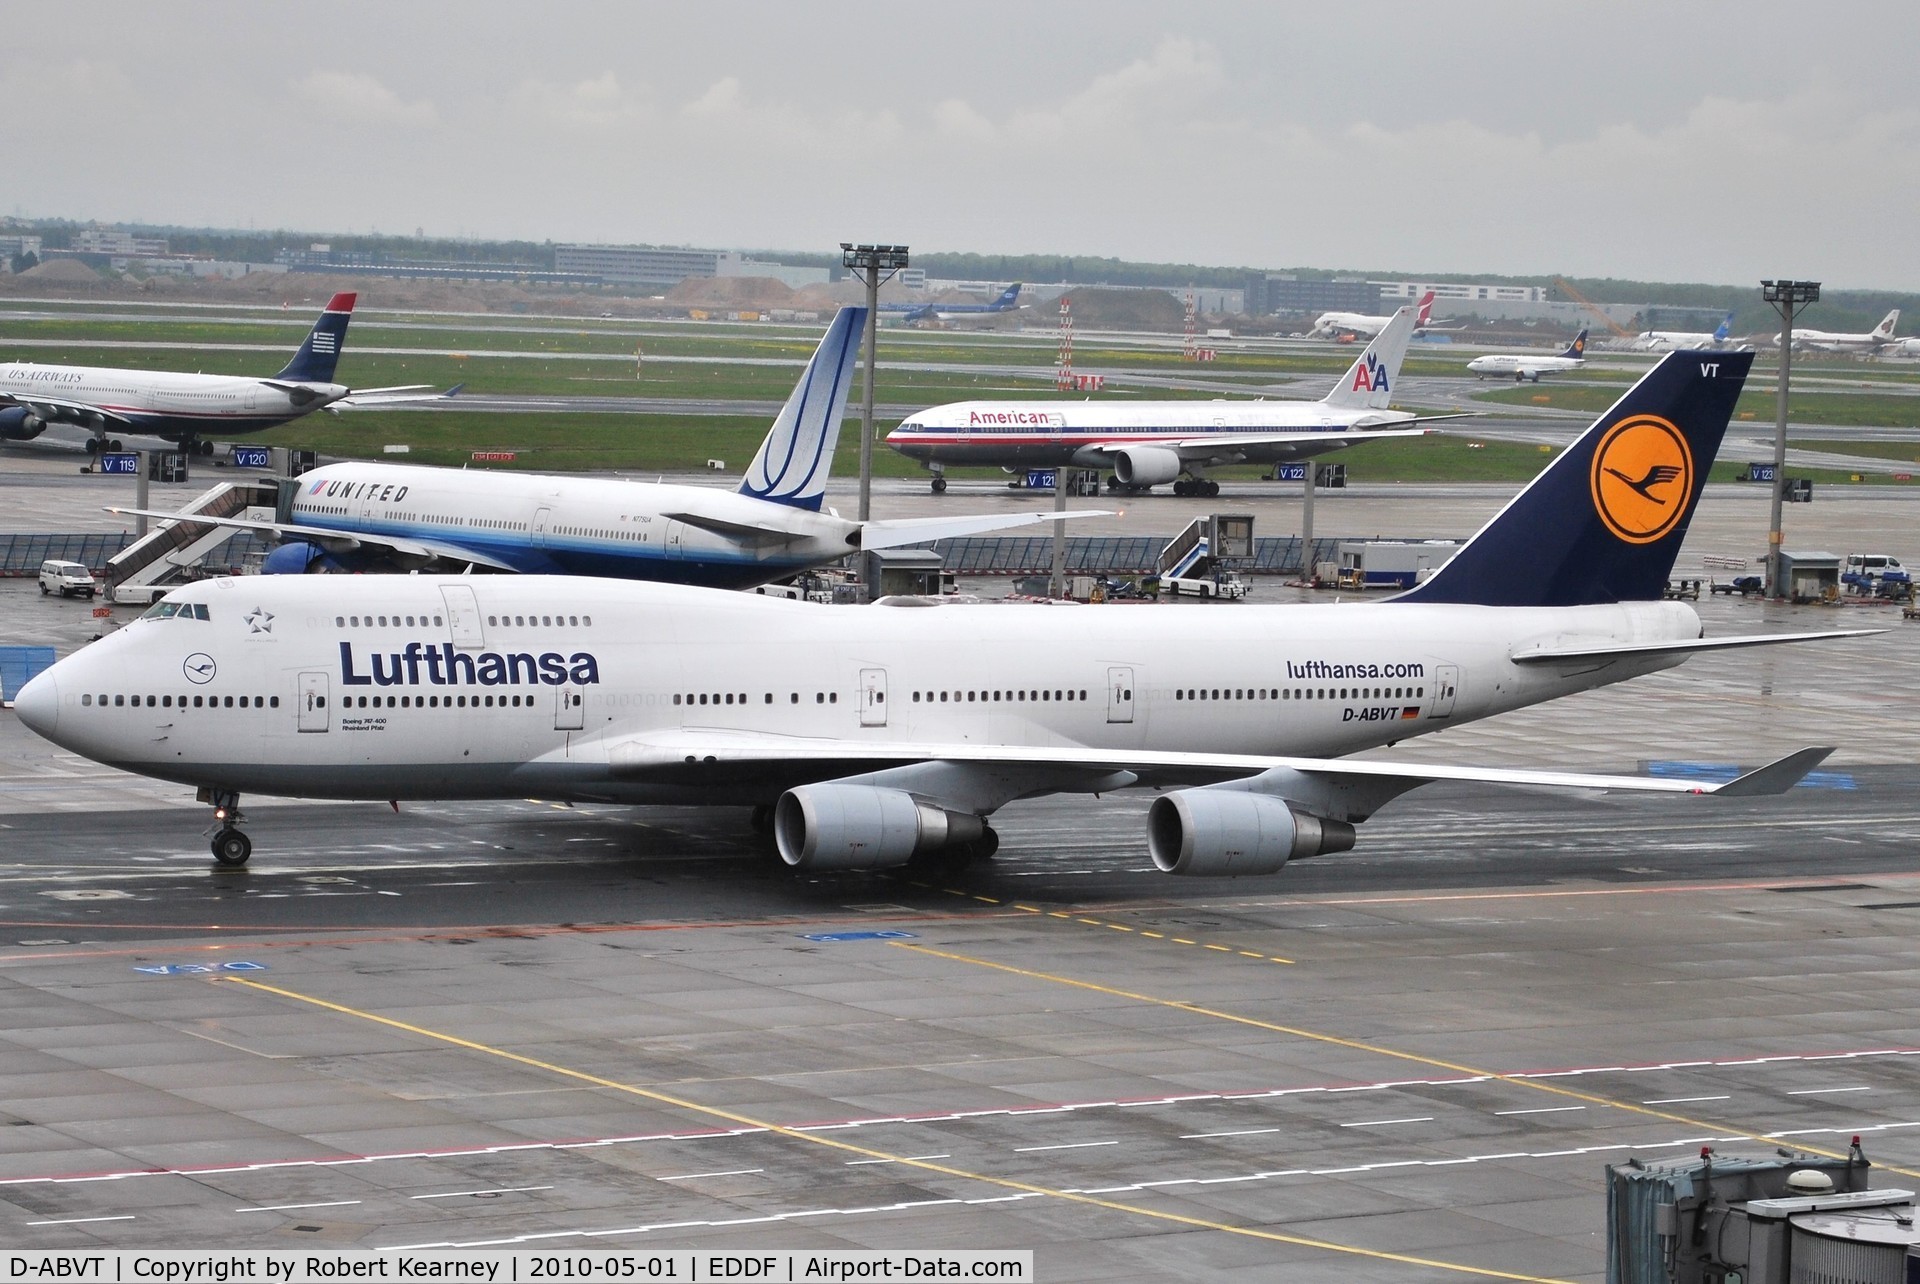 D-ABVT, 1997 Boeing 747-430 C/N 28287, Lufthansa heading for take-off